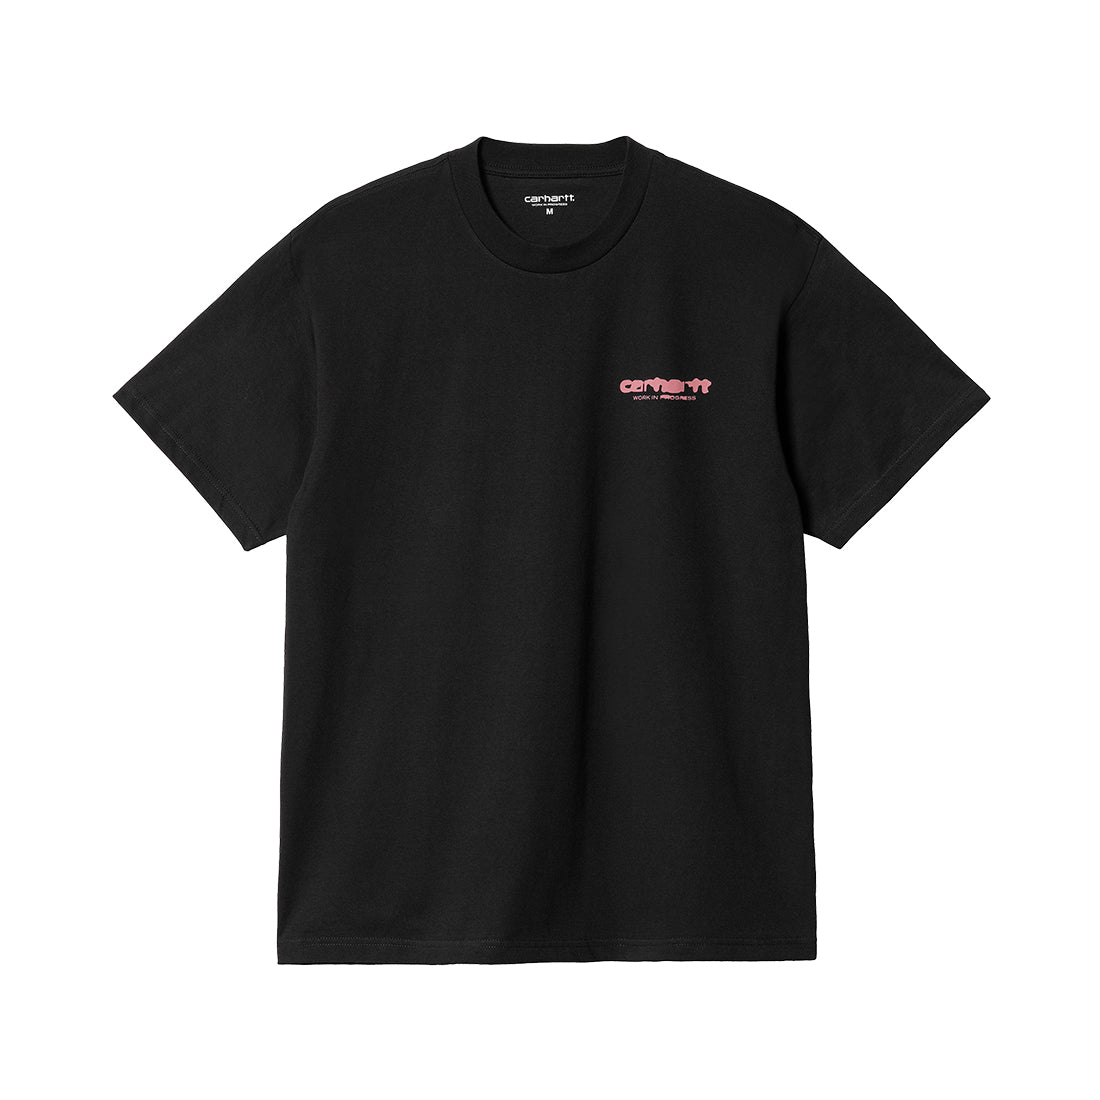 S/S Ink Bleed T-Shirt - Black/Pink